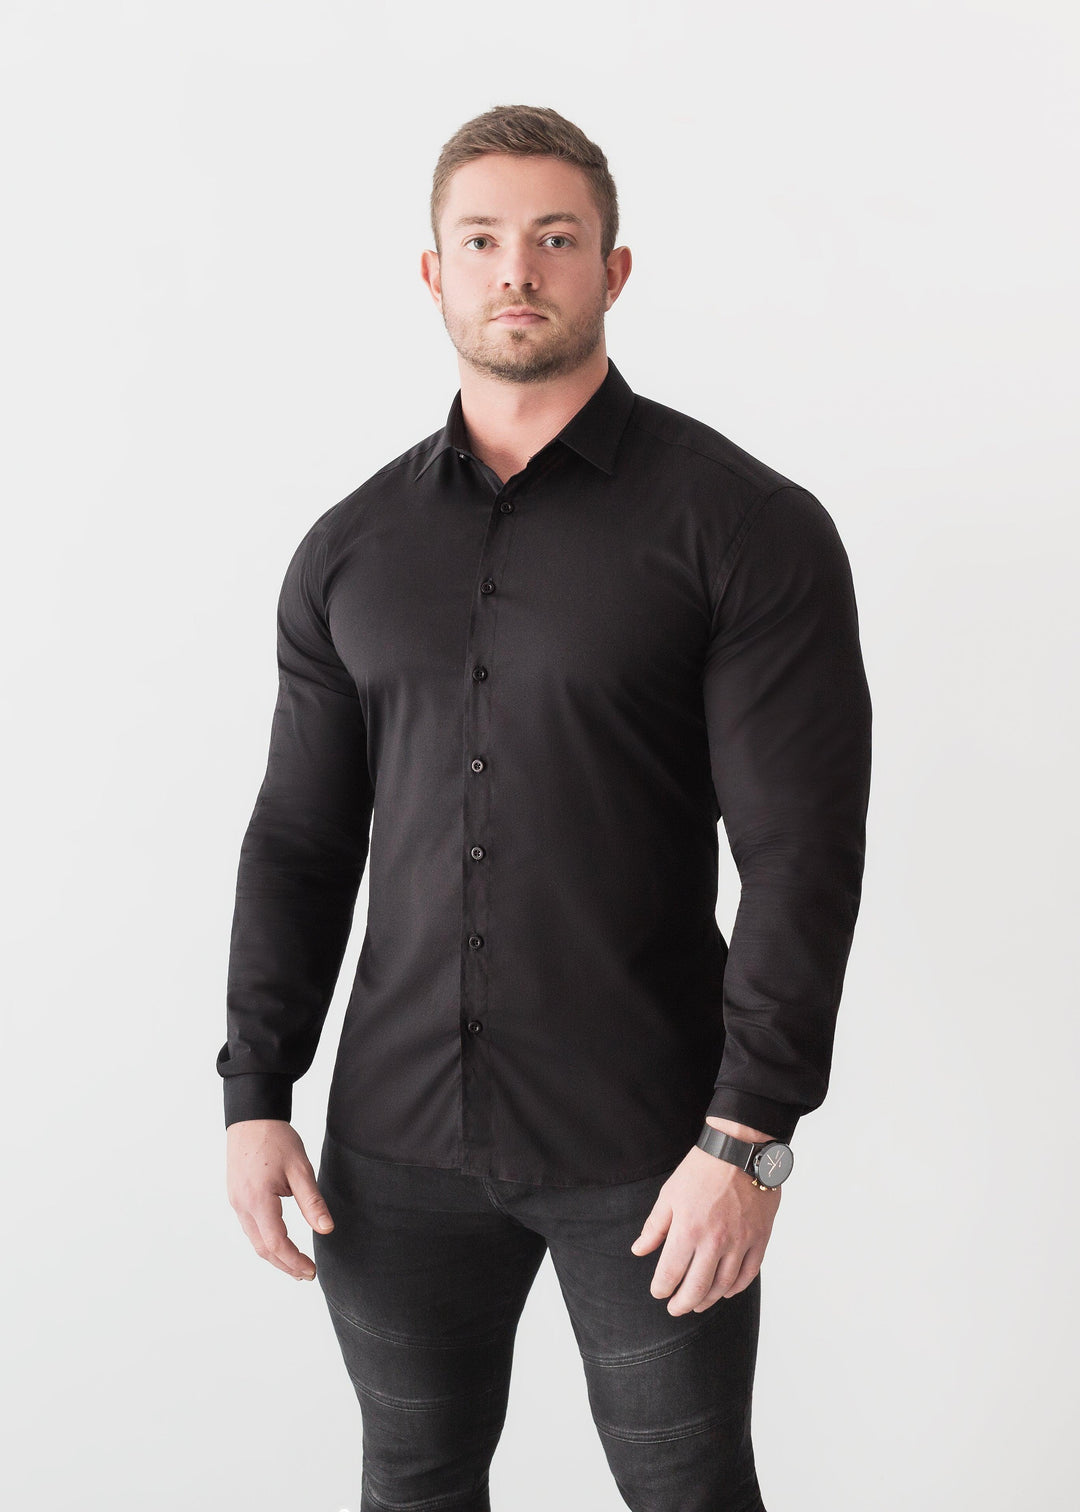 Premium Stretch Dress Shirt - Black – Edward Michael Apparel